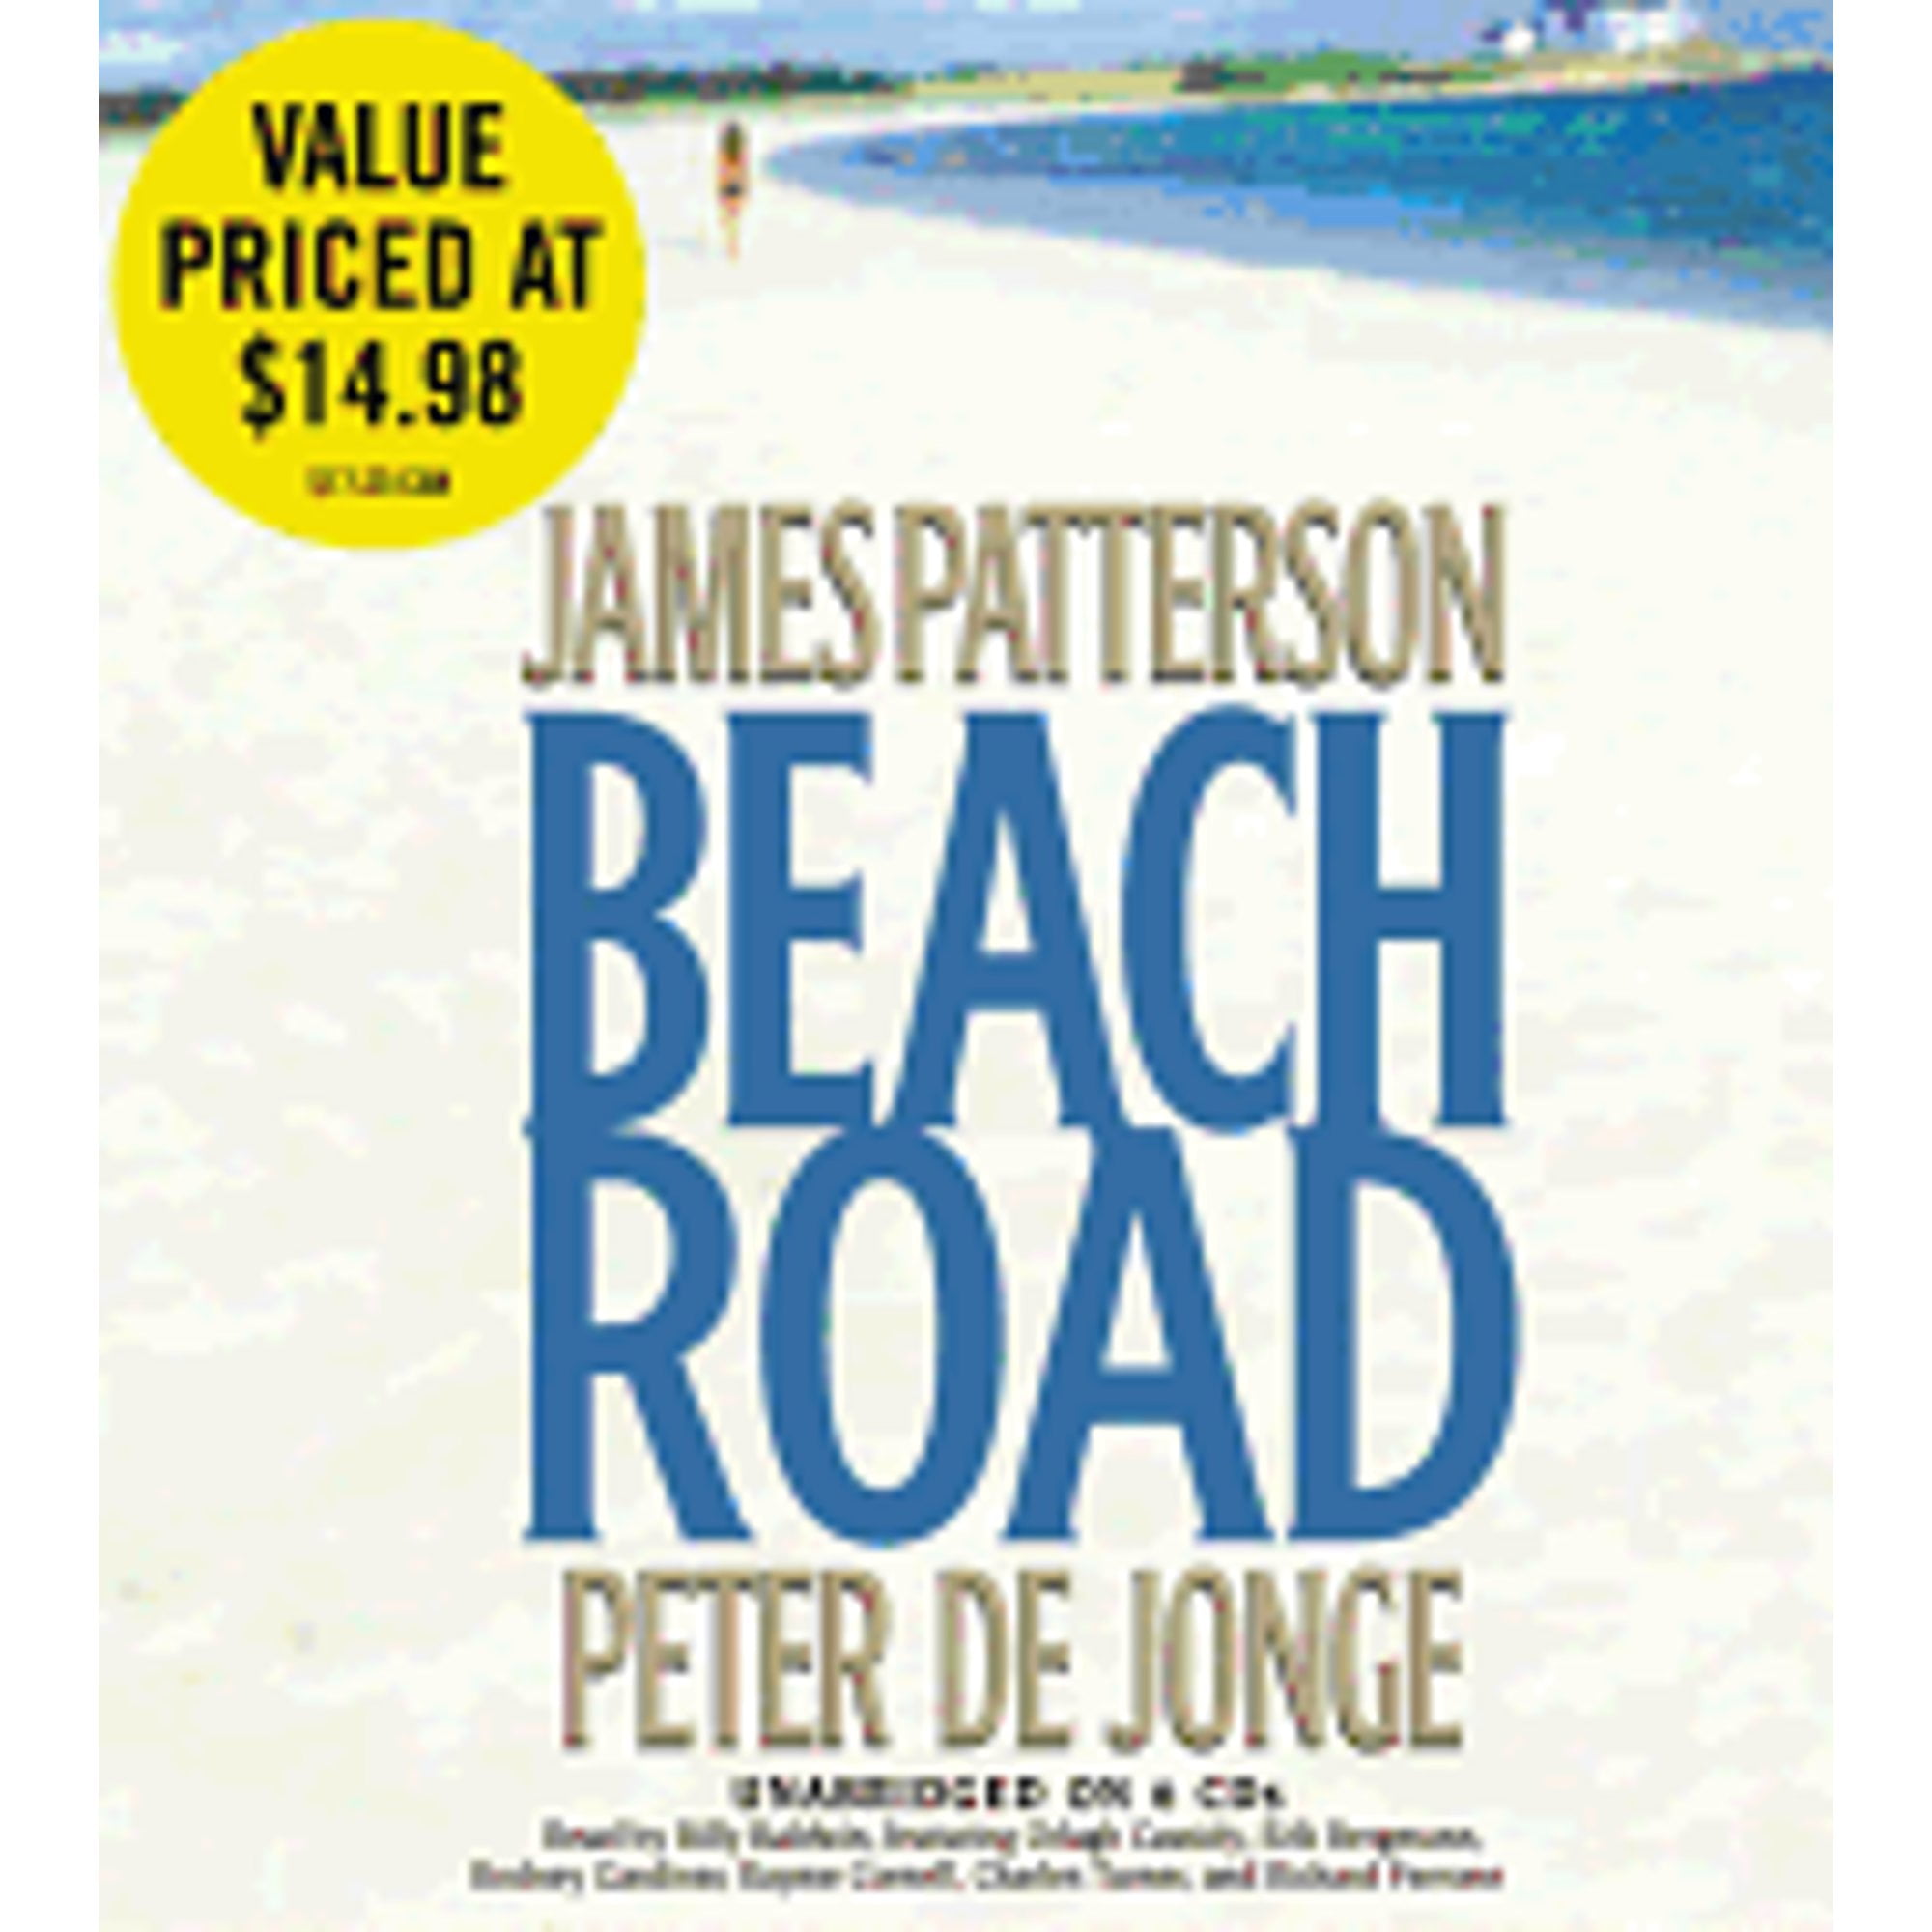 Pre-Owned Beach Road (Audiobook 9781600242519) by James Patterson, Peter De Jonge, Billy Baldwin